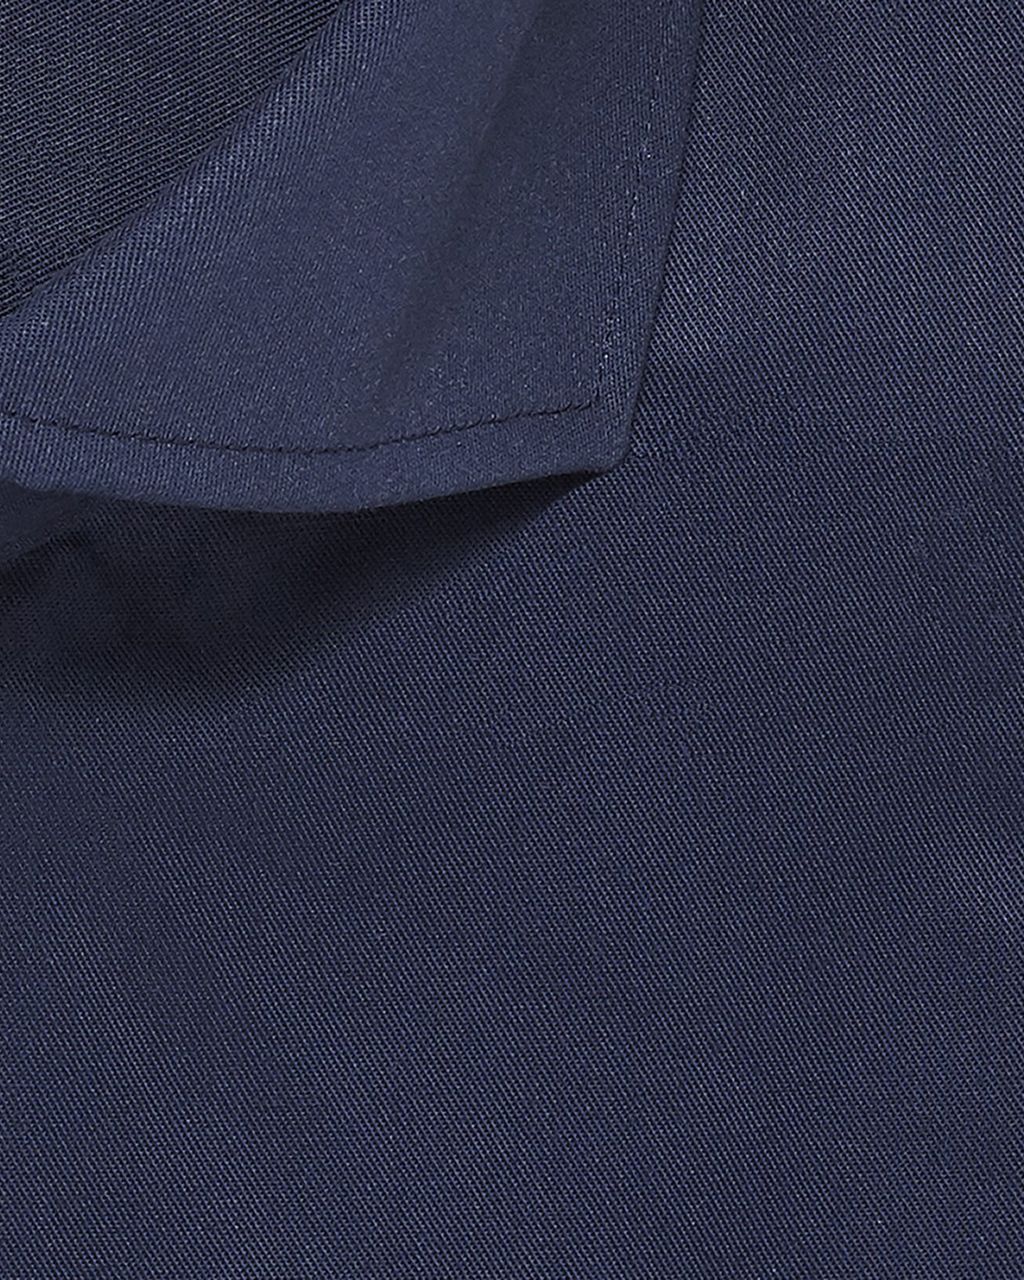 Profuomo Originale Slim fit Overhemd LM Donker blauw 025117-31-37